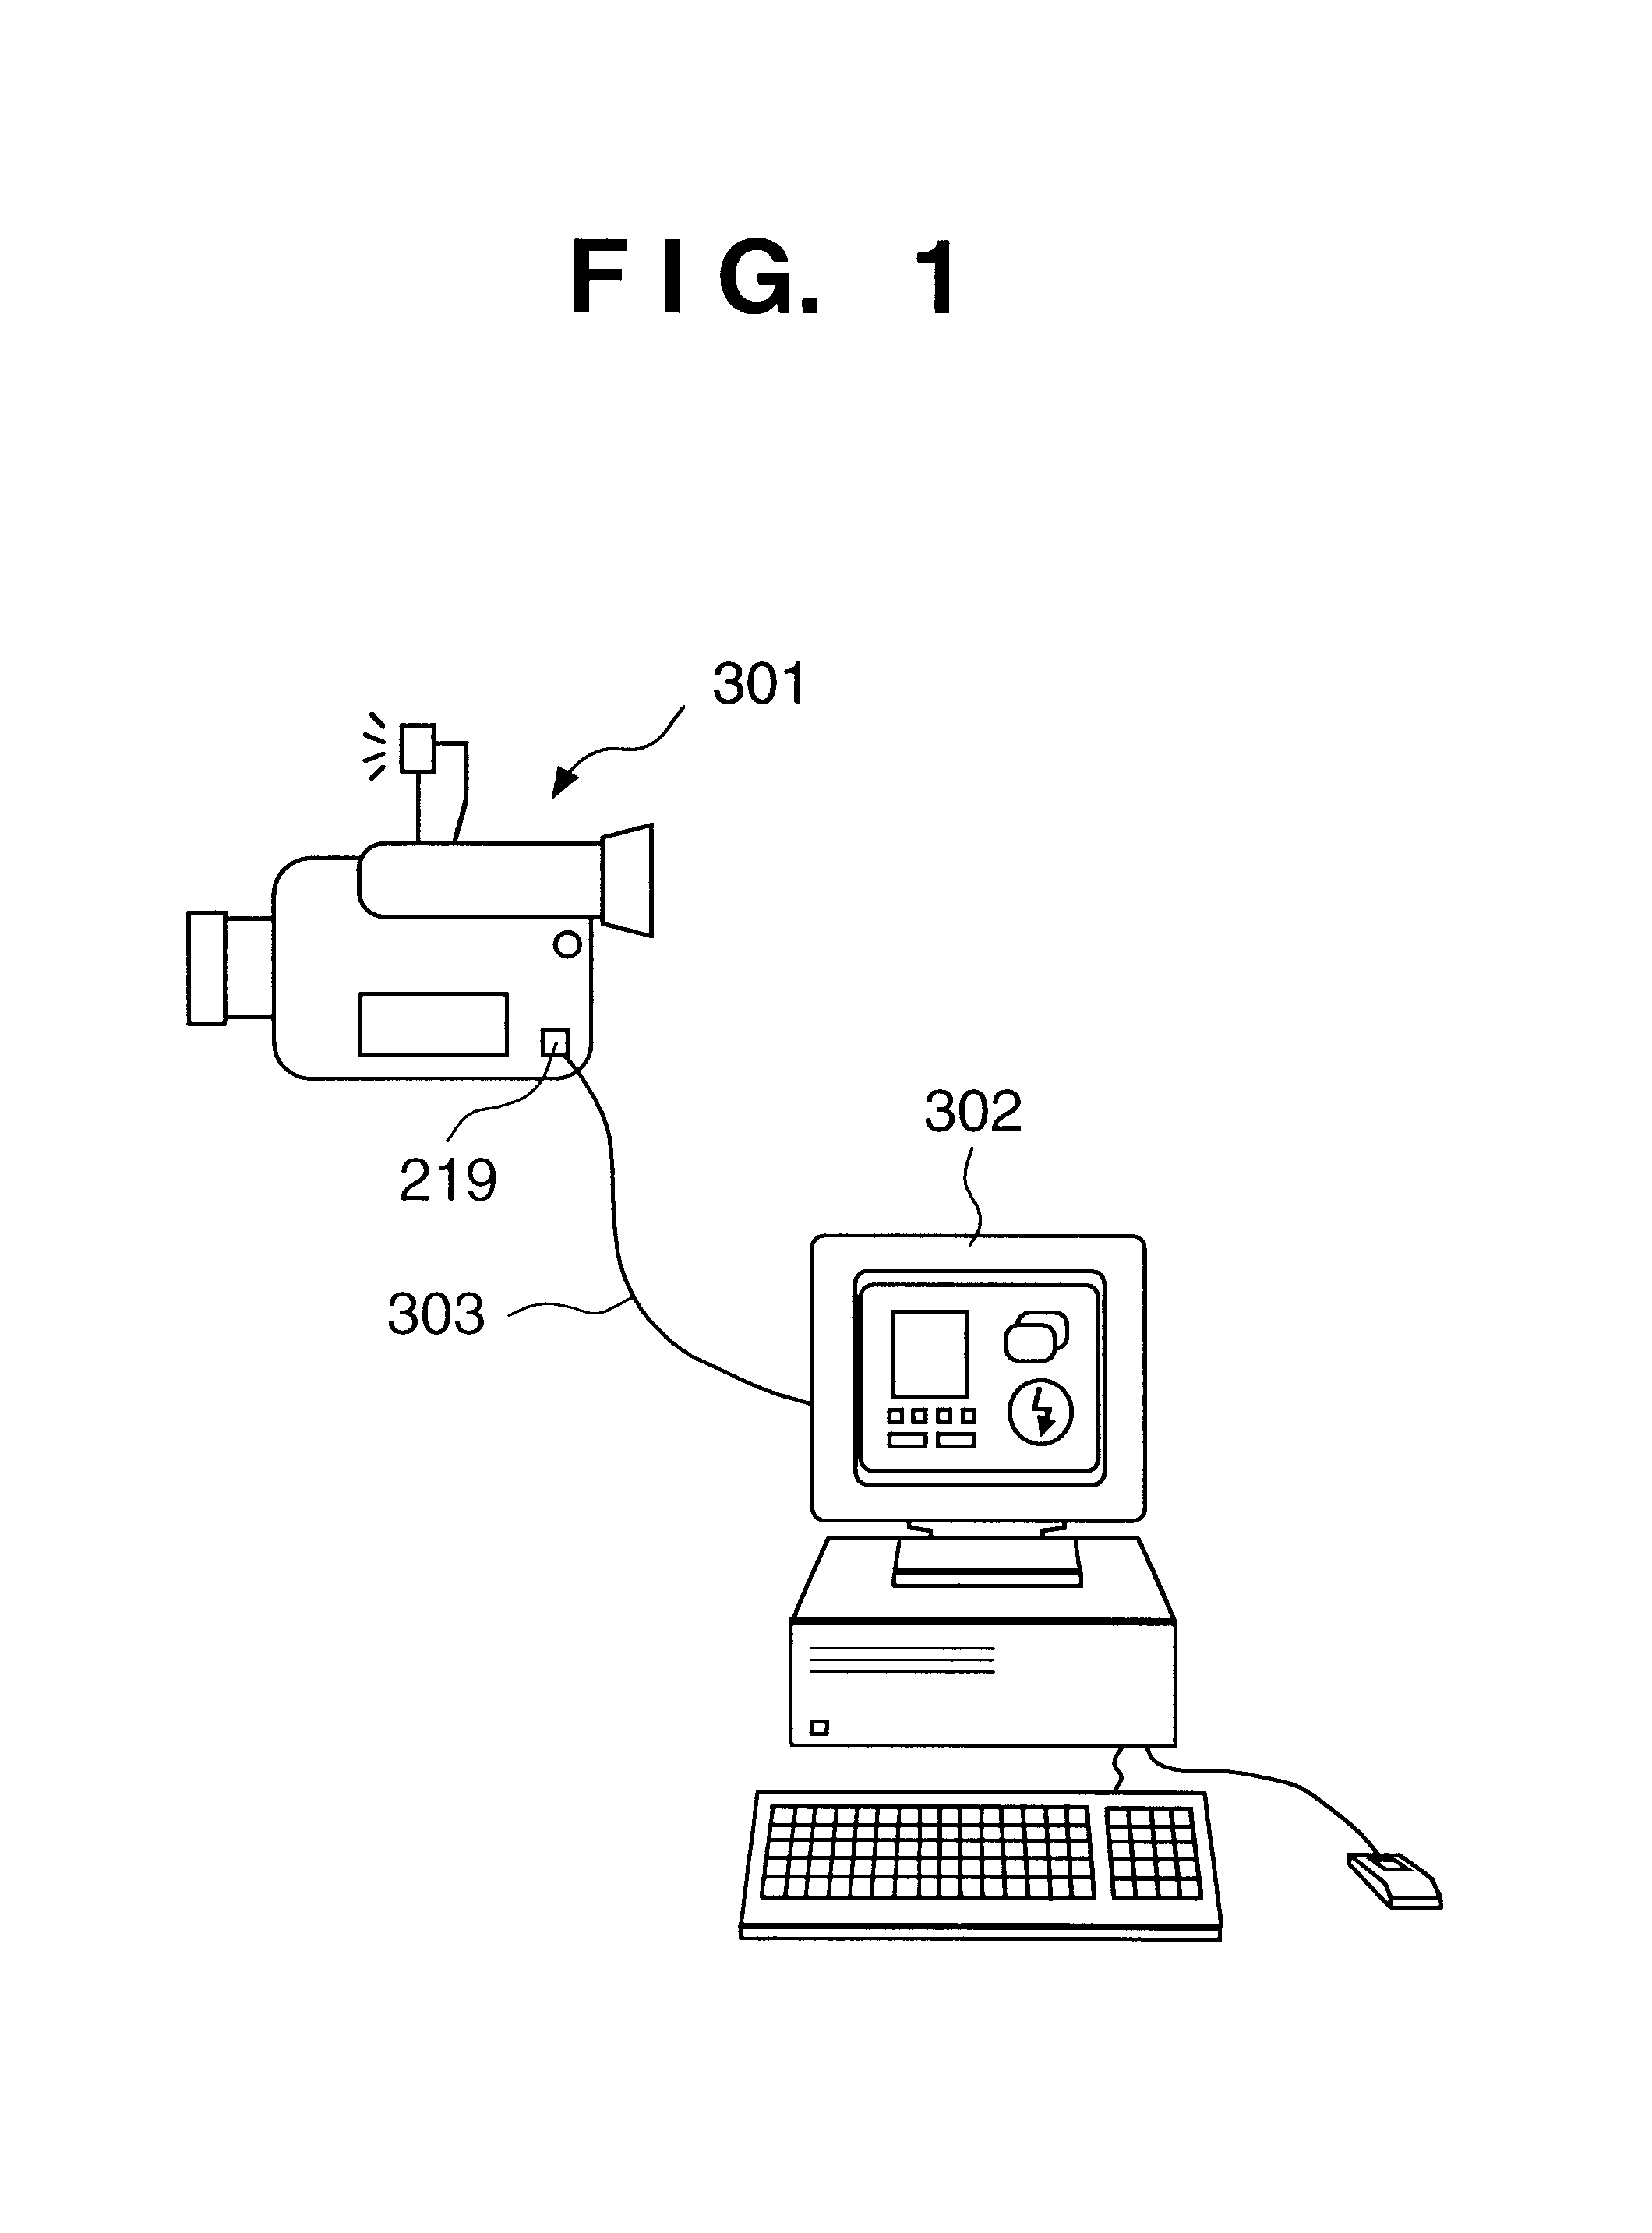 Remote control of image sensing apparatus